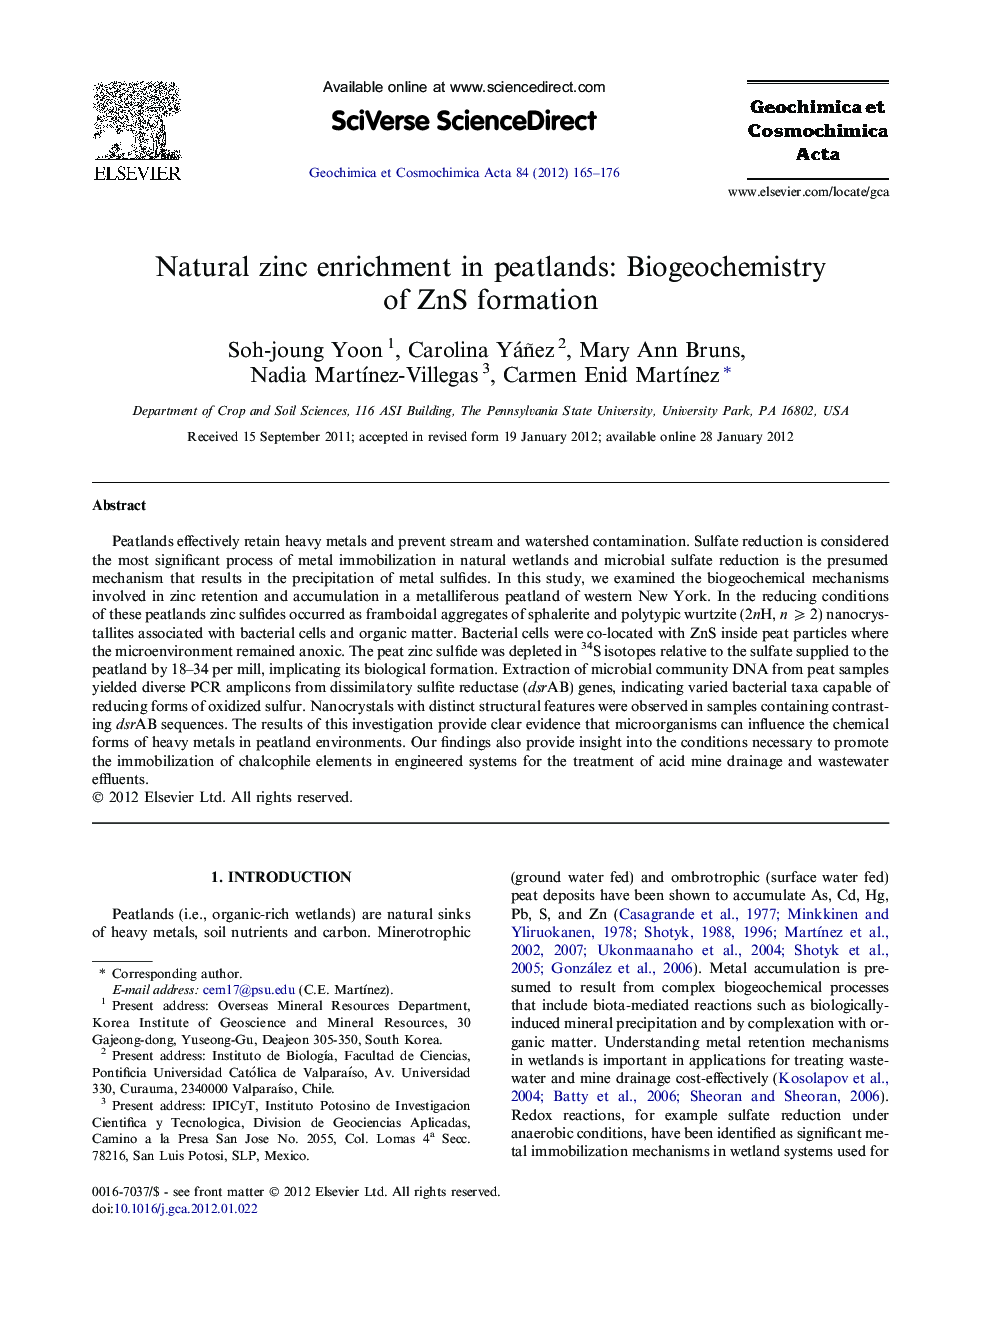 Natural zinc enrichment in peatlands: Biogeochemistry of ZnS formation